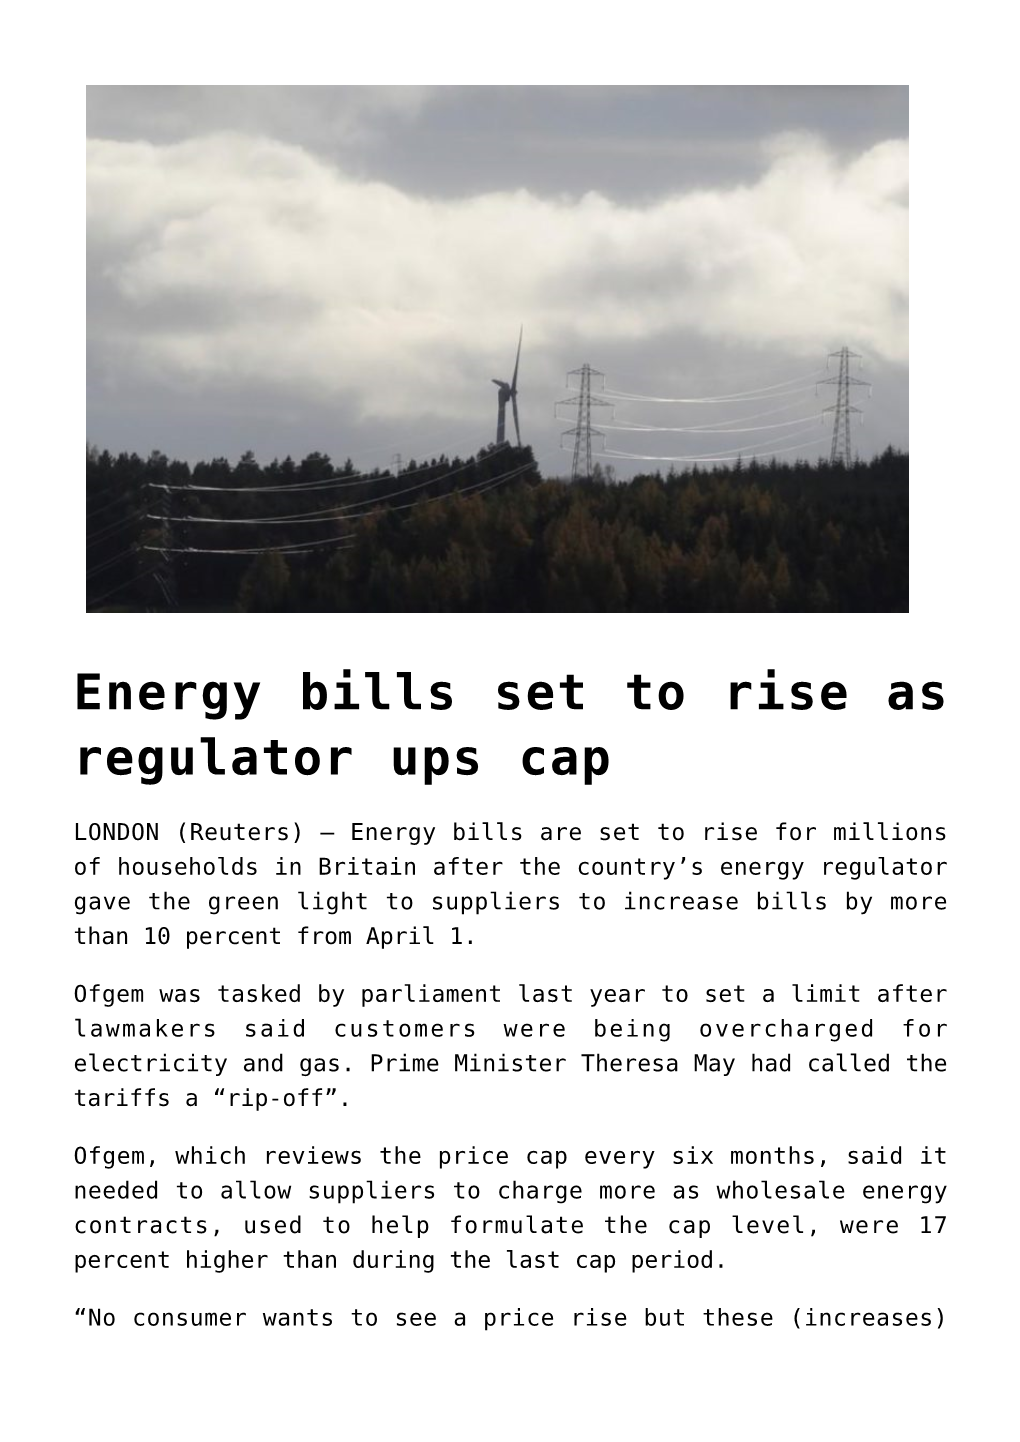 Energy Bills Set to Rise As Regulator Ups Cap